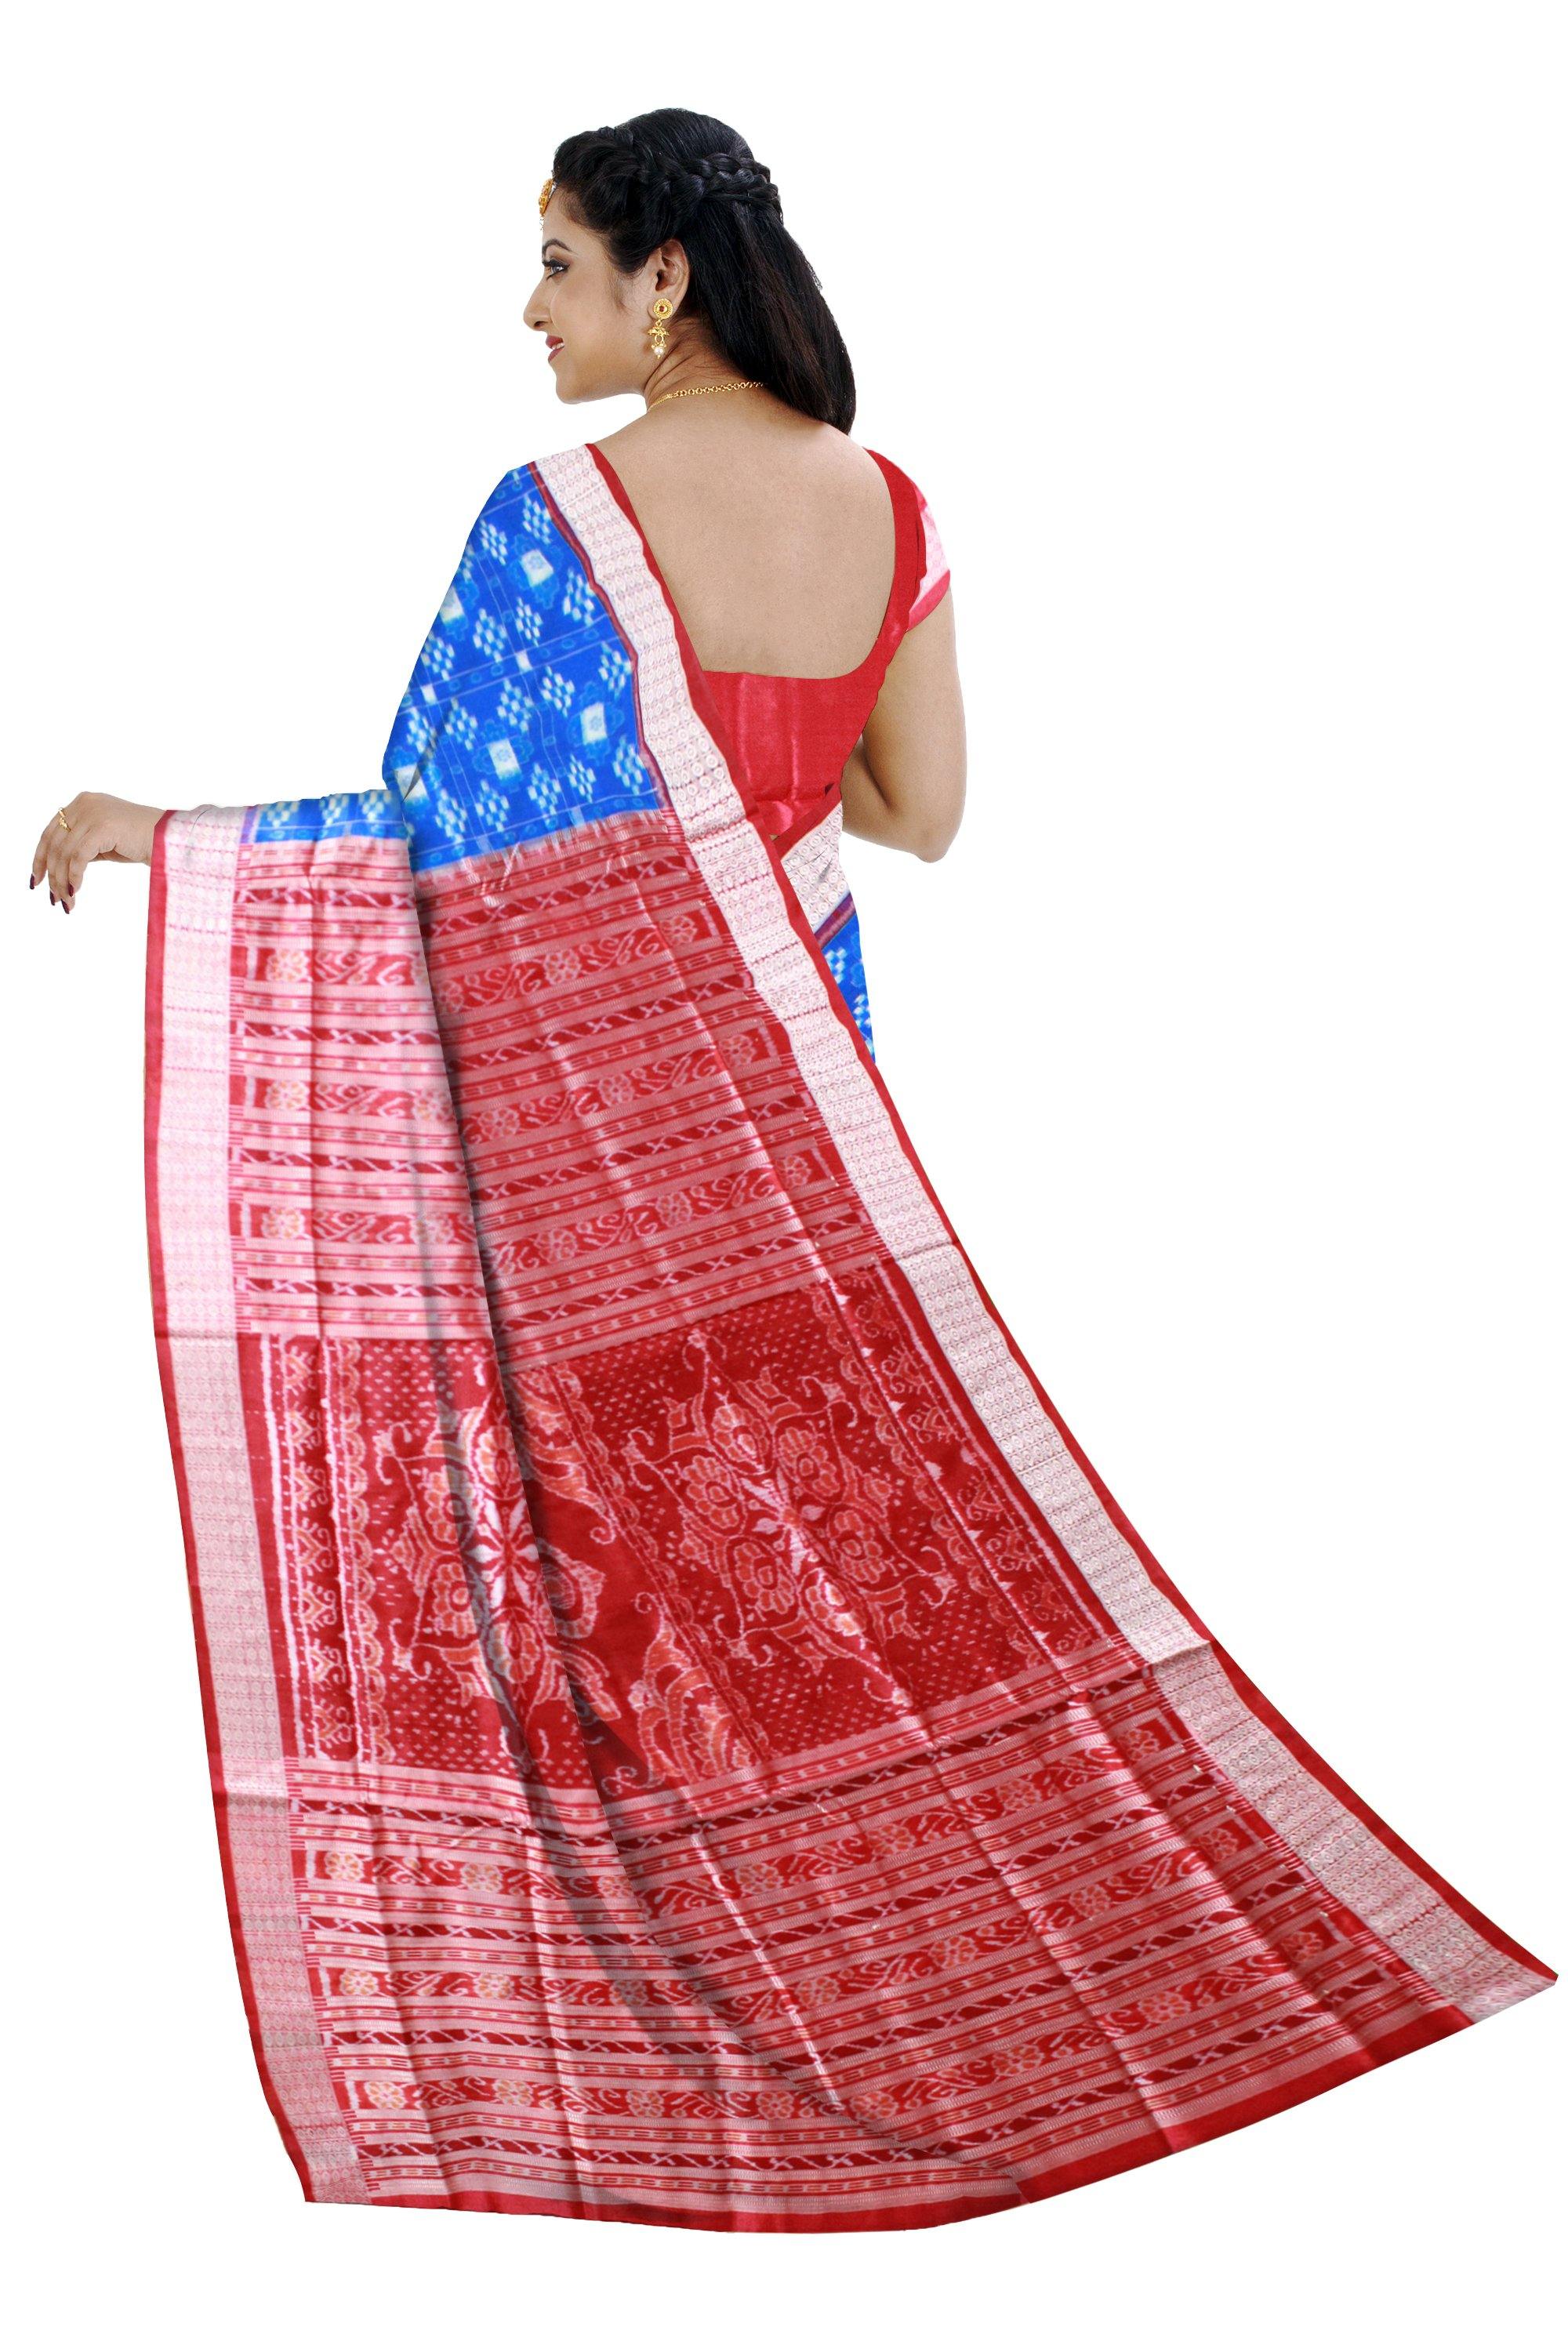 Exclusive sapta print pure pata saree in blue color available with blouse piece - Koshali Arts & Crafts Enterprise